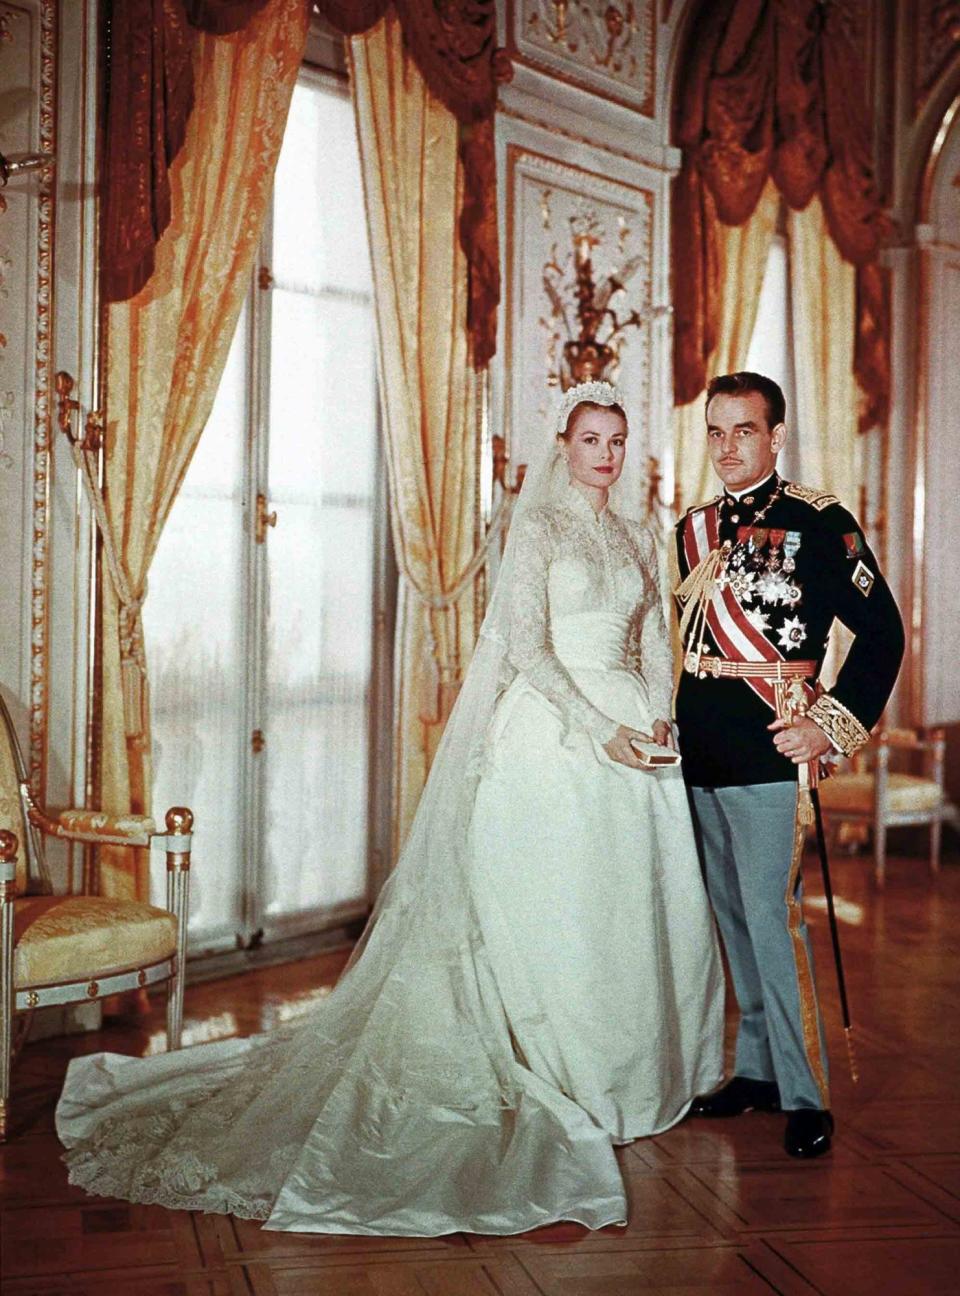 Prince Rainier II and Grace Kelly of Monaco